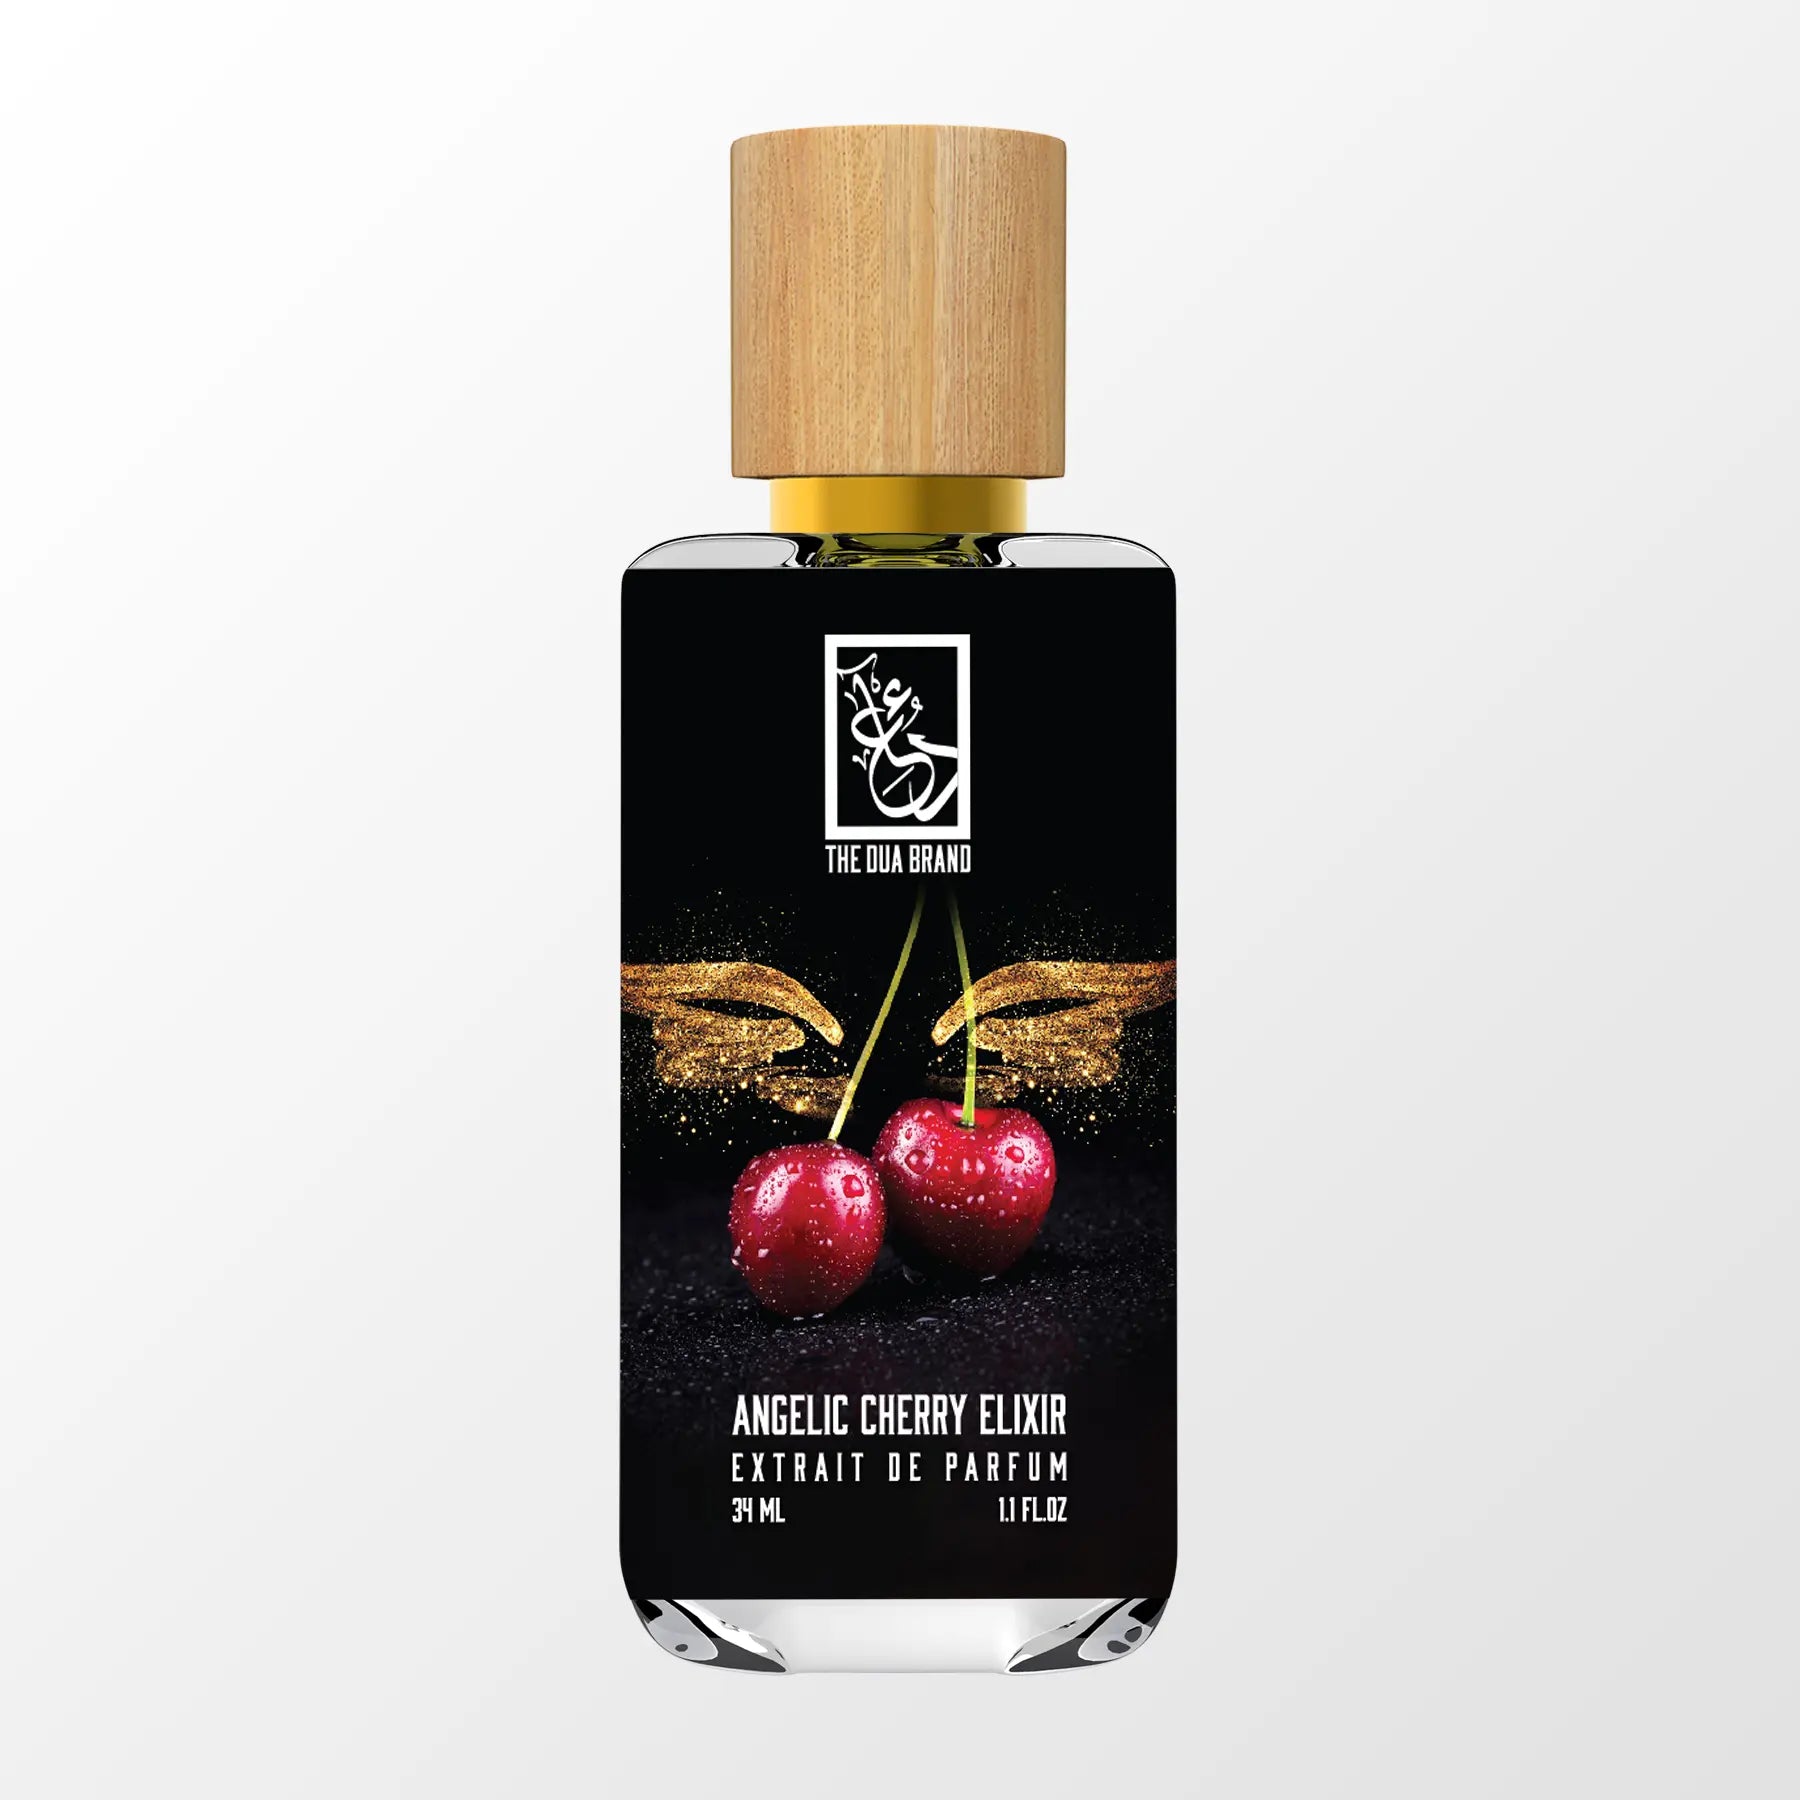 Angelic Cherry Elixir